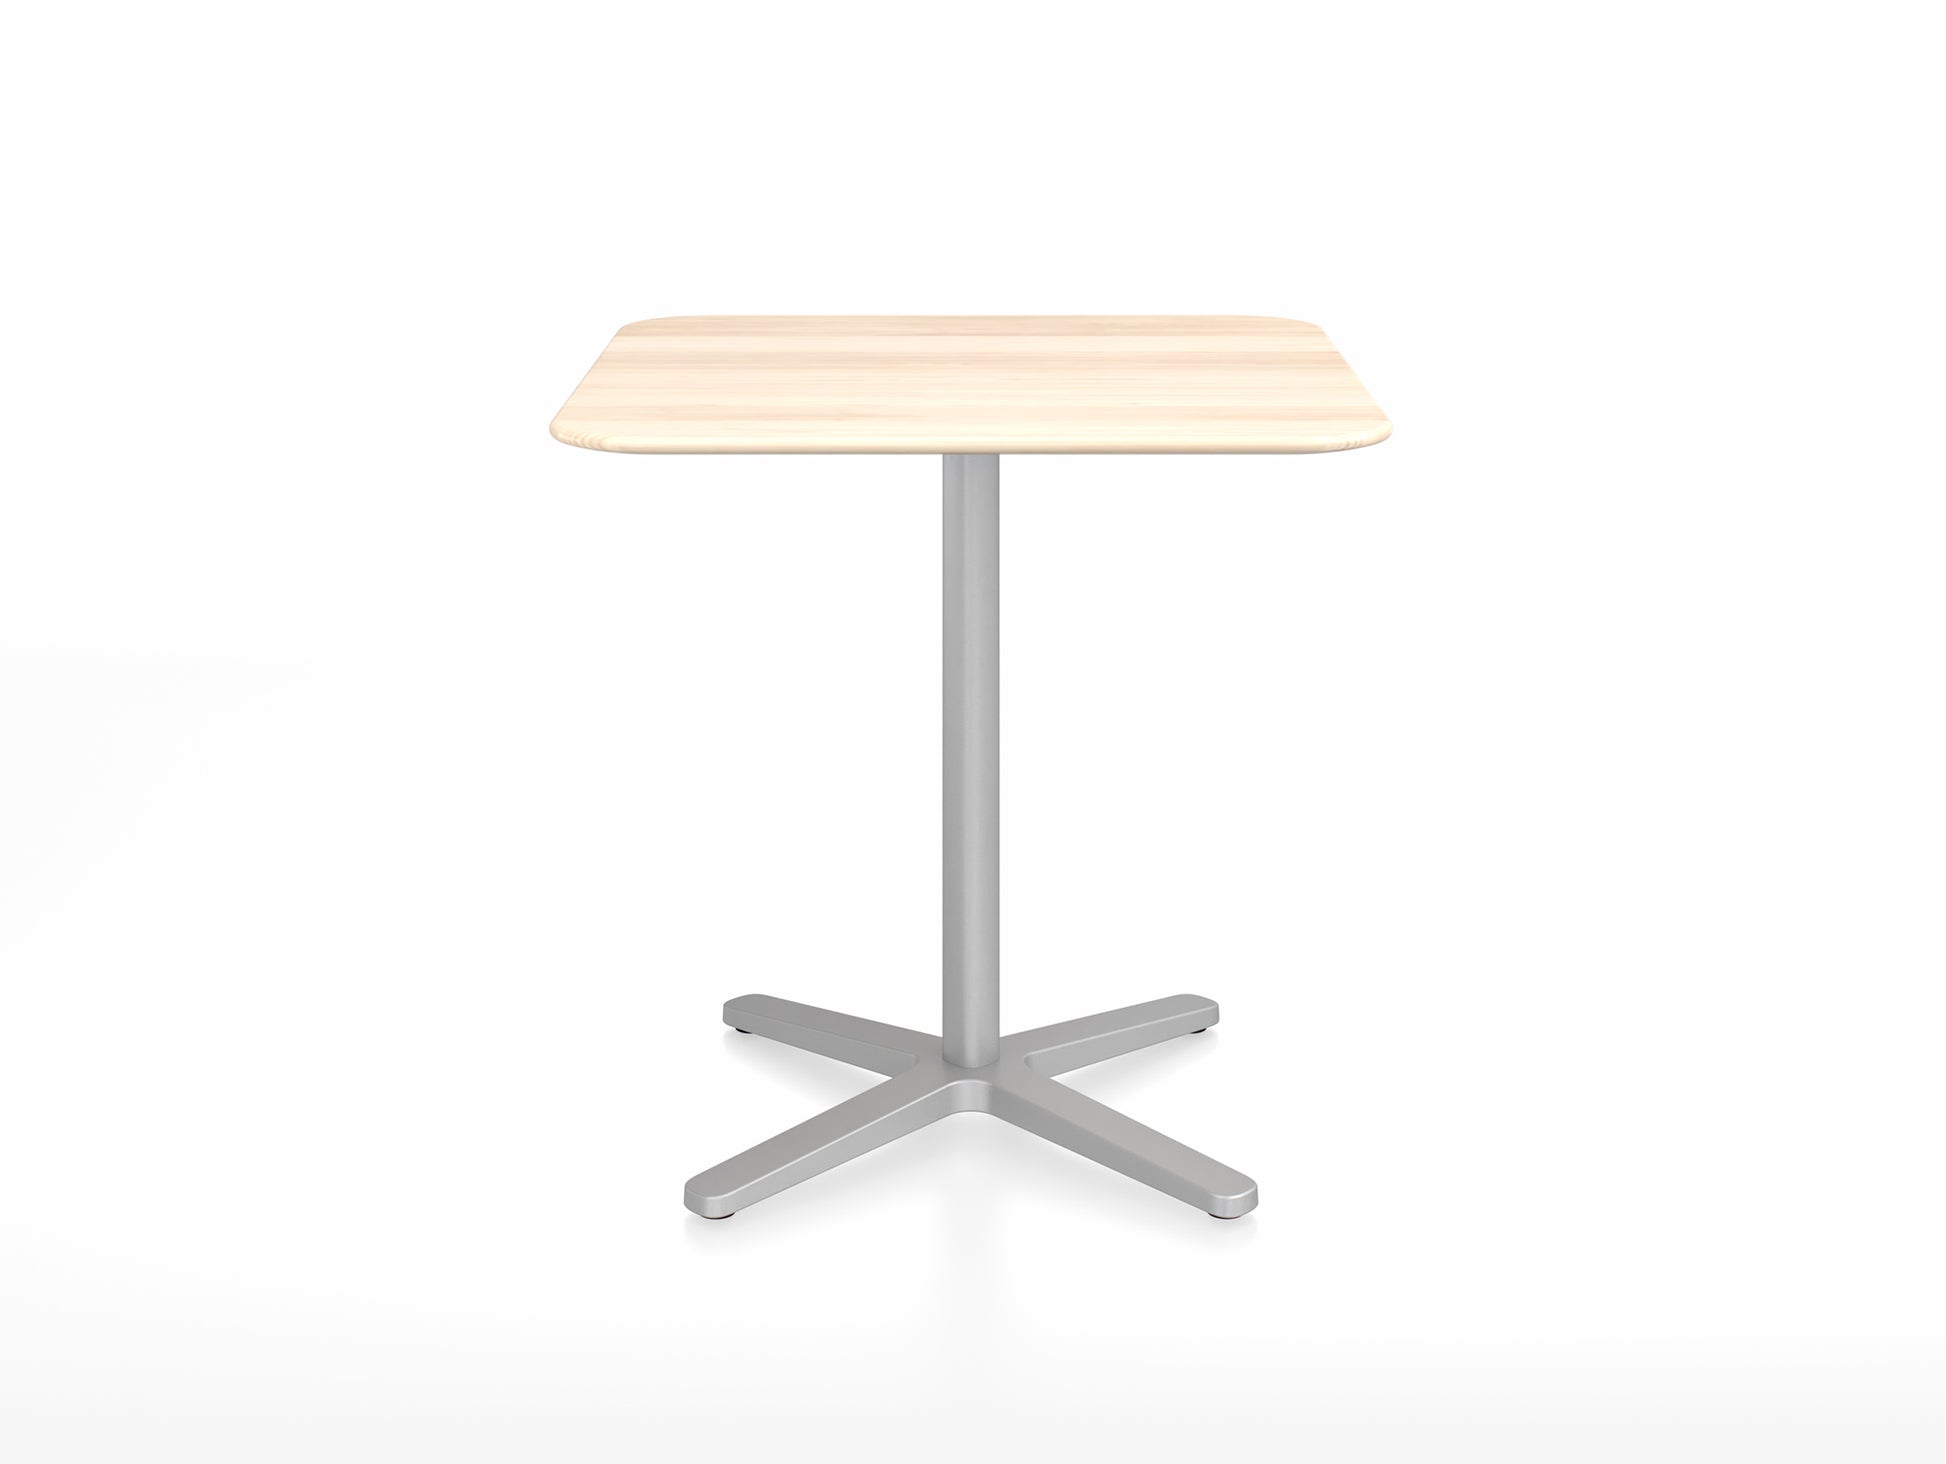 2 Inch Outdoor Cafe Table - X Base by Emeco - Accoya Wood Top / Aluminium Base / 76x76